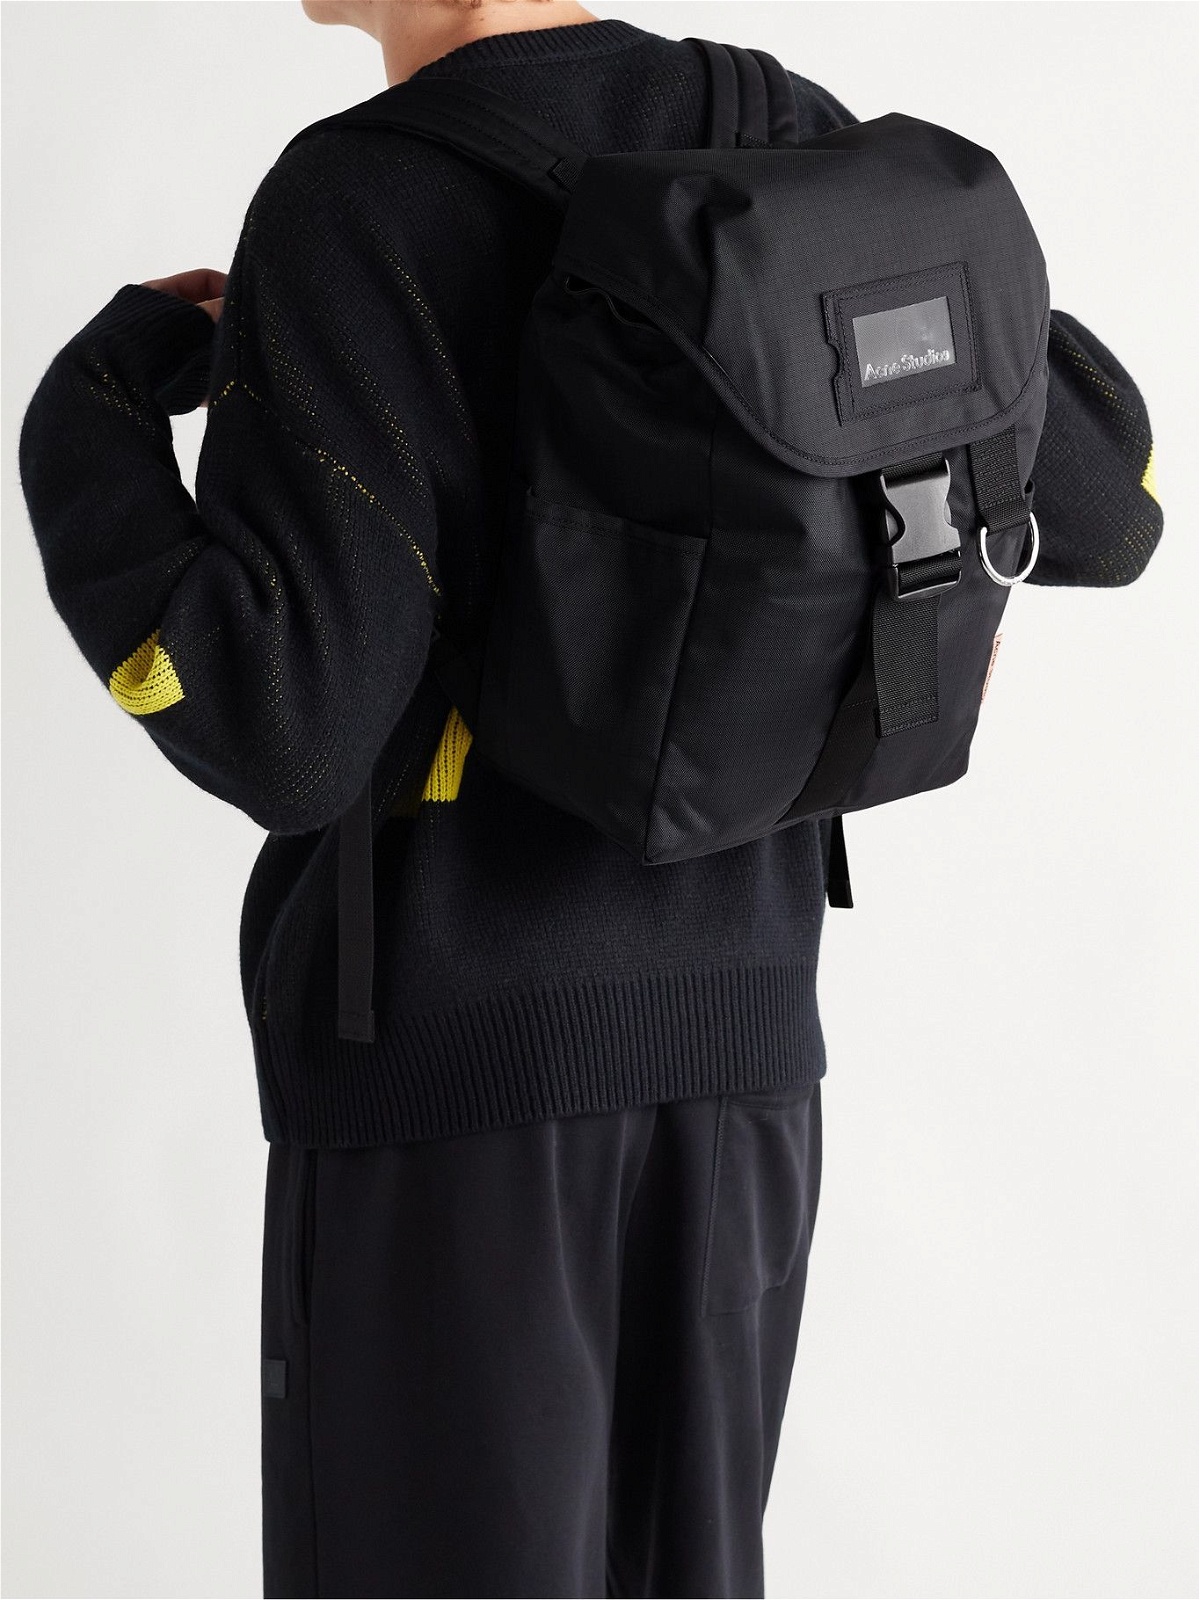 ACNE STUDIOS Suede-Trimmed Ripstop Backpack for Men